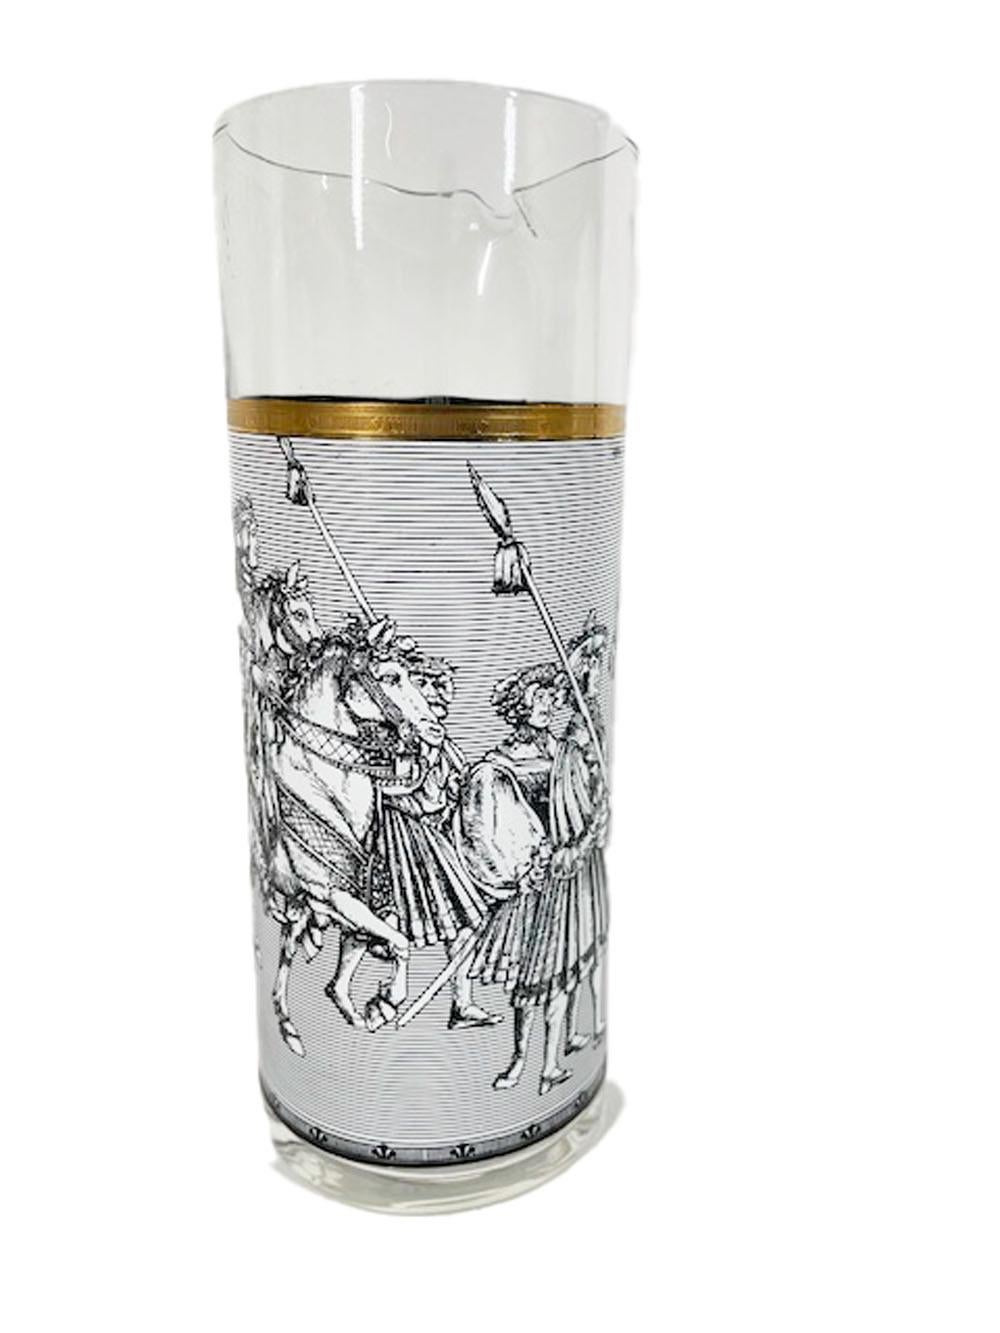 Vintage Cera Glassware Camelot Pattern Cocktail Set in Black and White For Sale 4